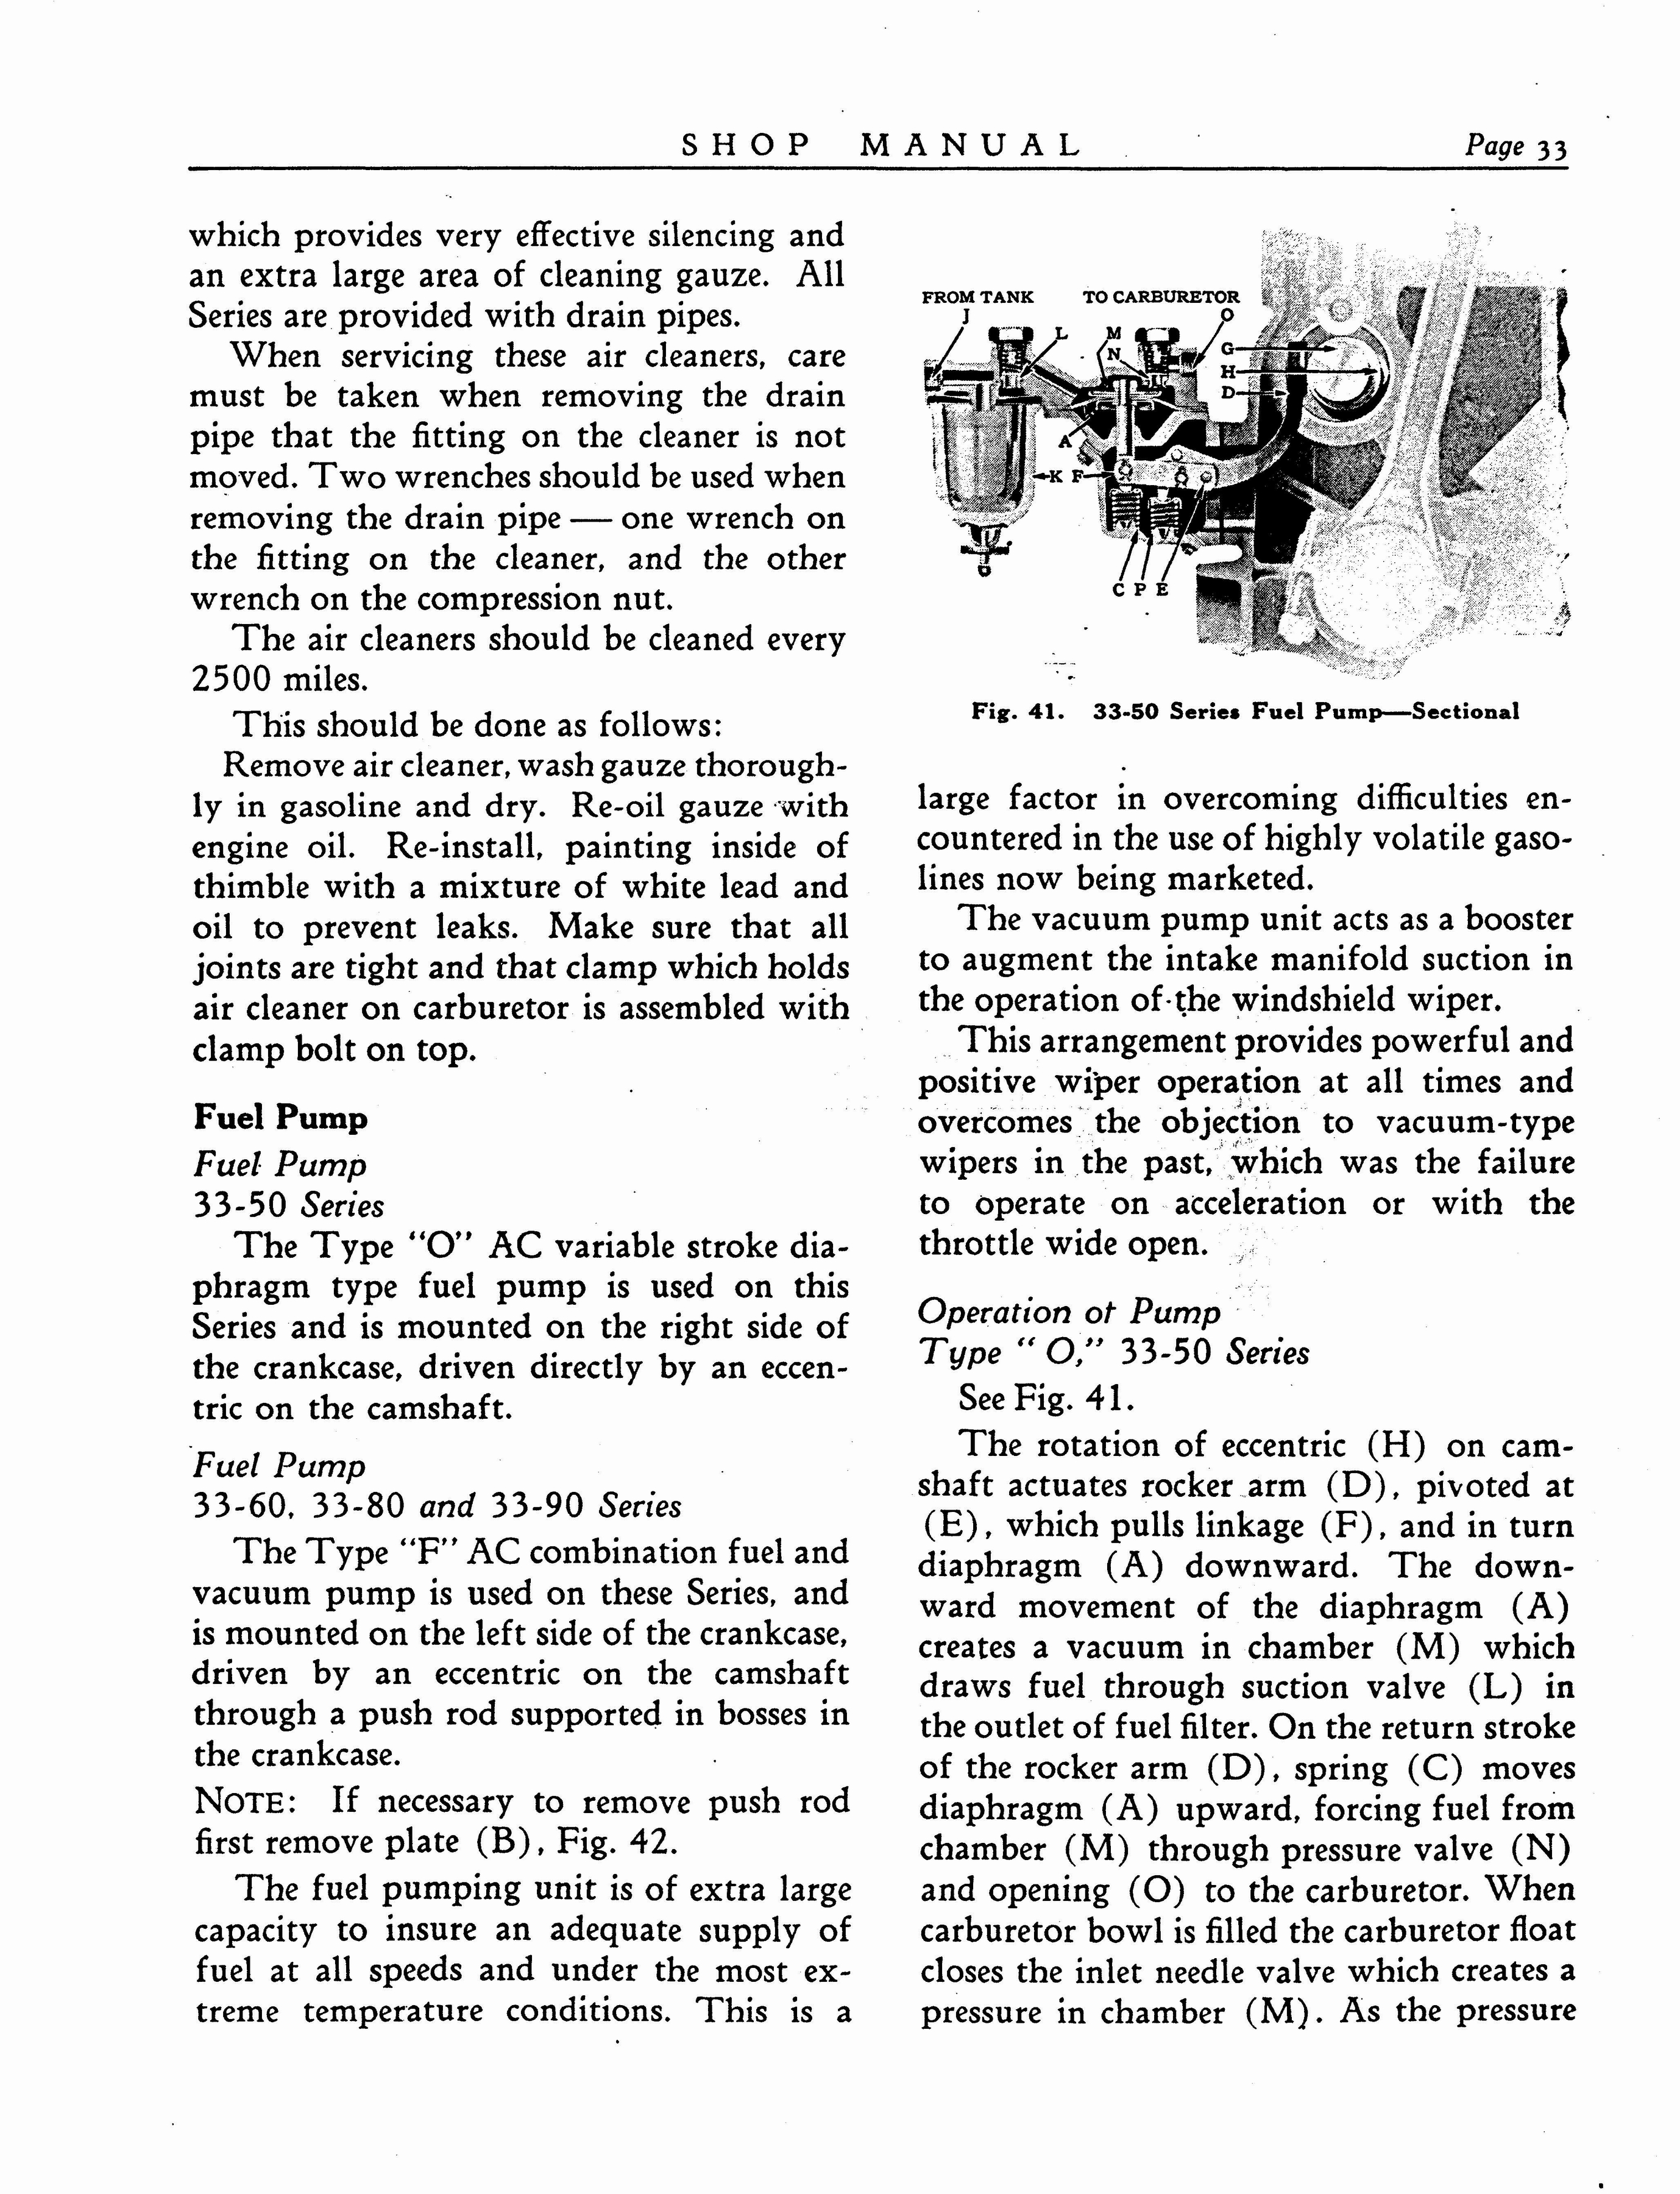 n_1933 Buick Shop Manual_Page_034.jpg